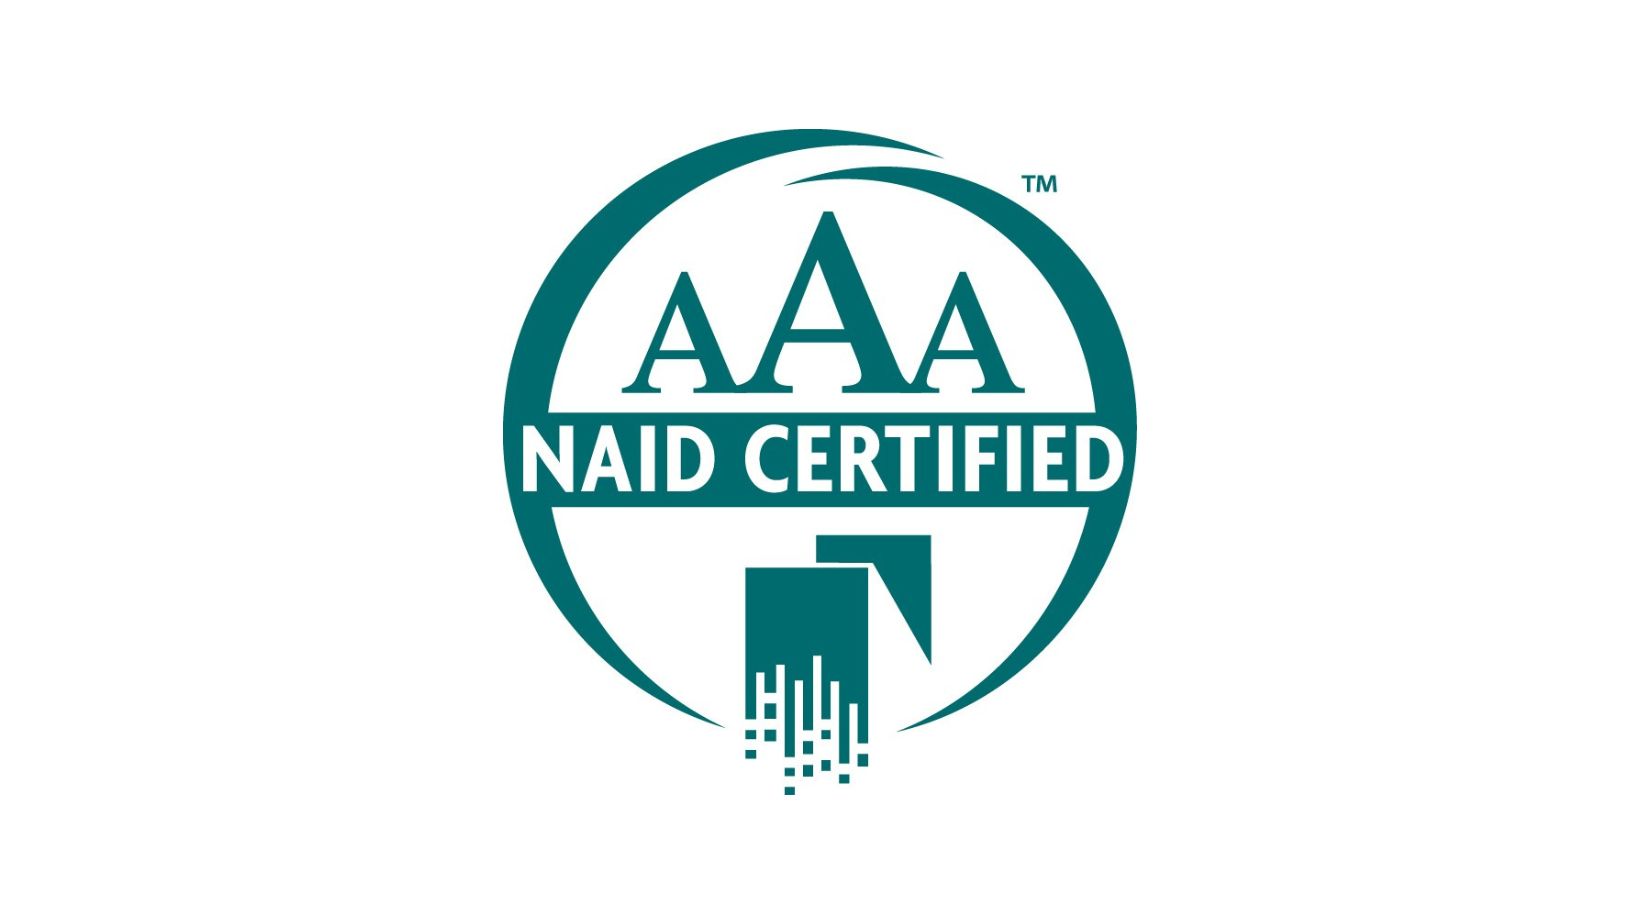 NAID AAA Certification logo